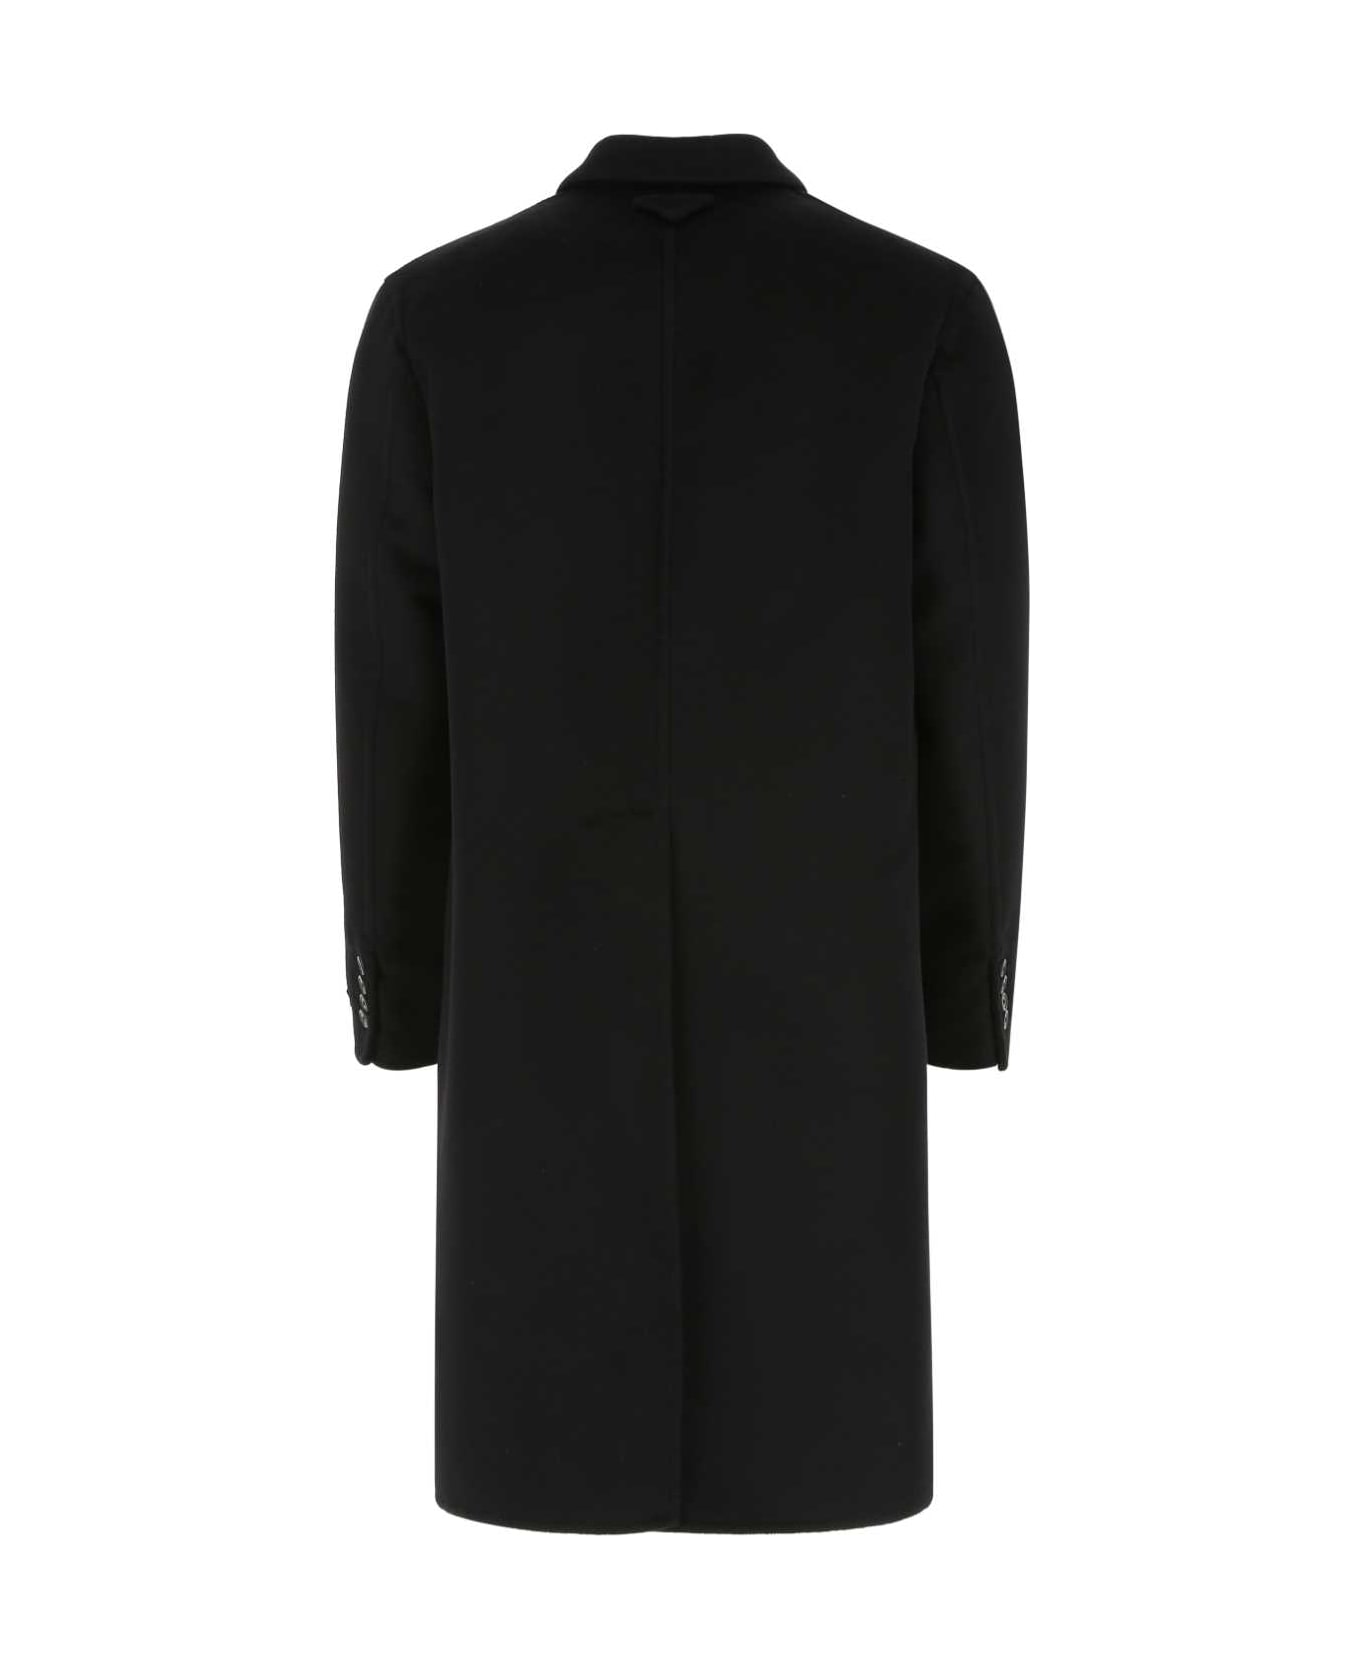 Prada Black Wool Blend Coat - F0002